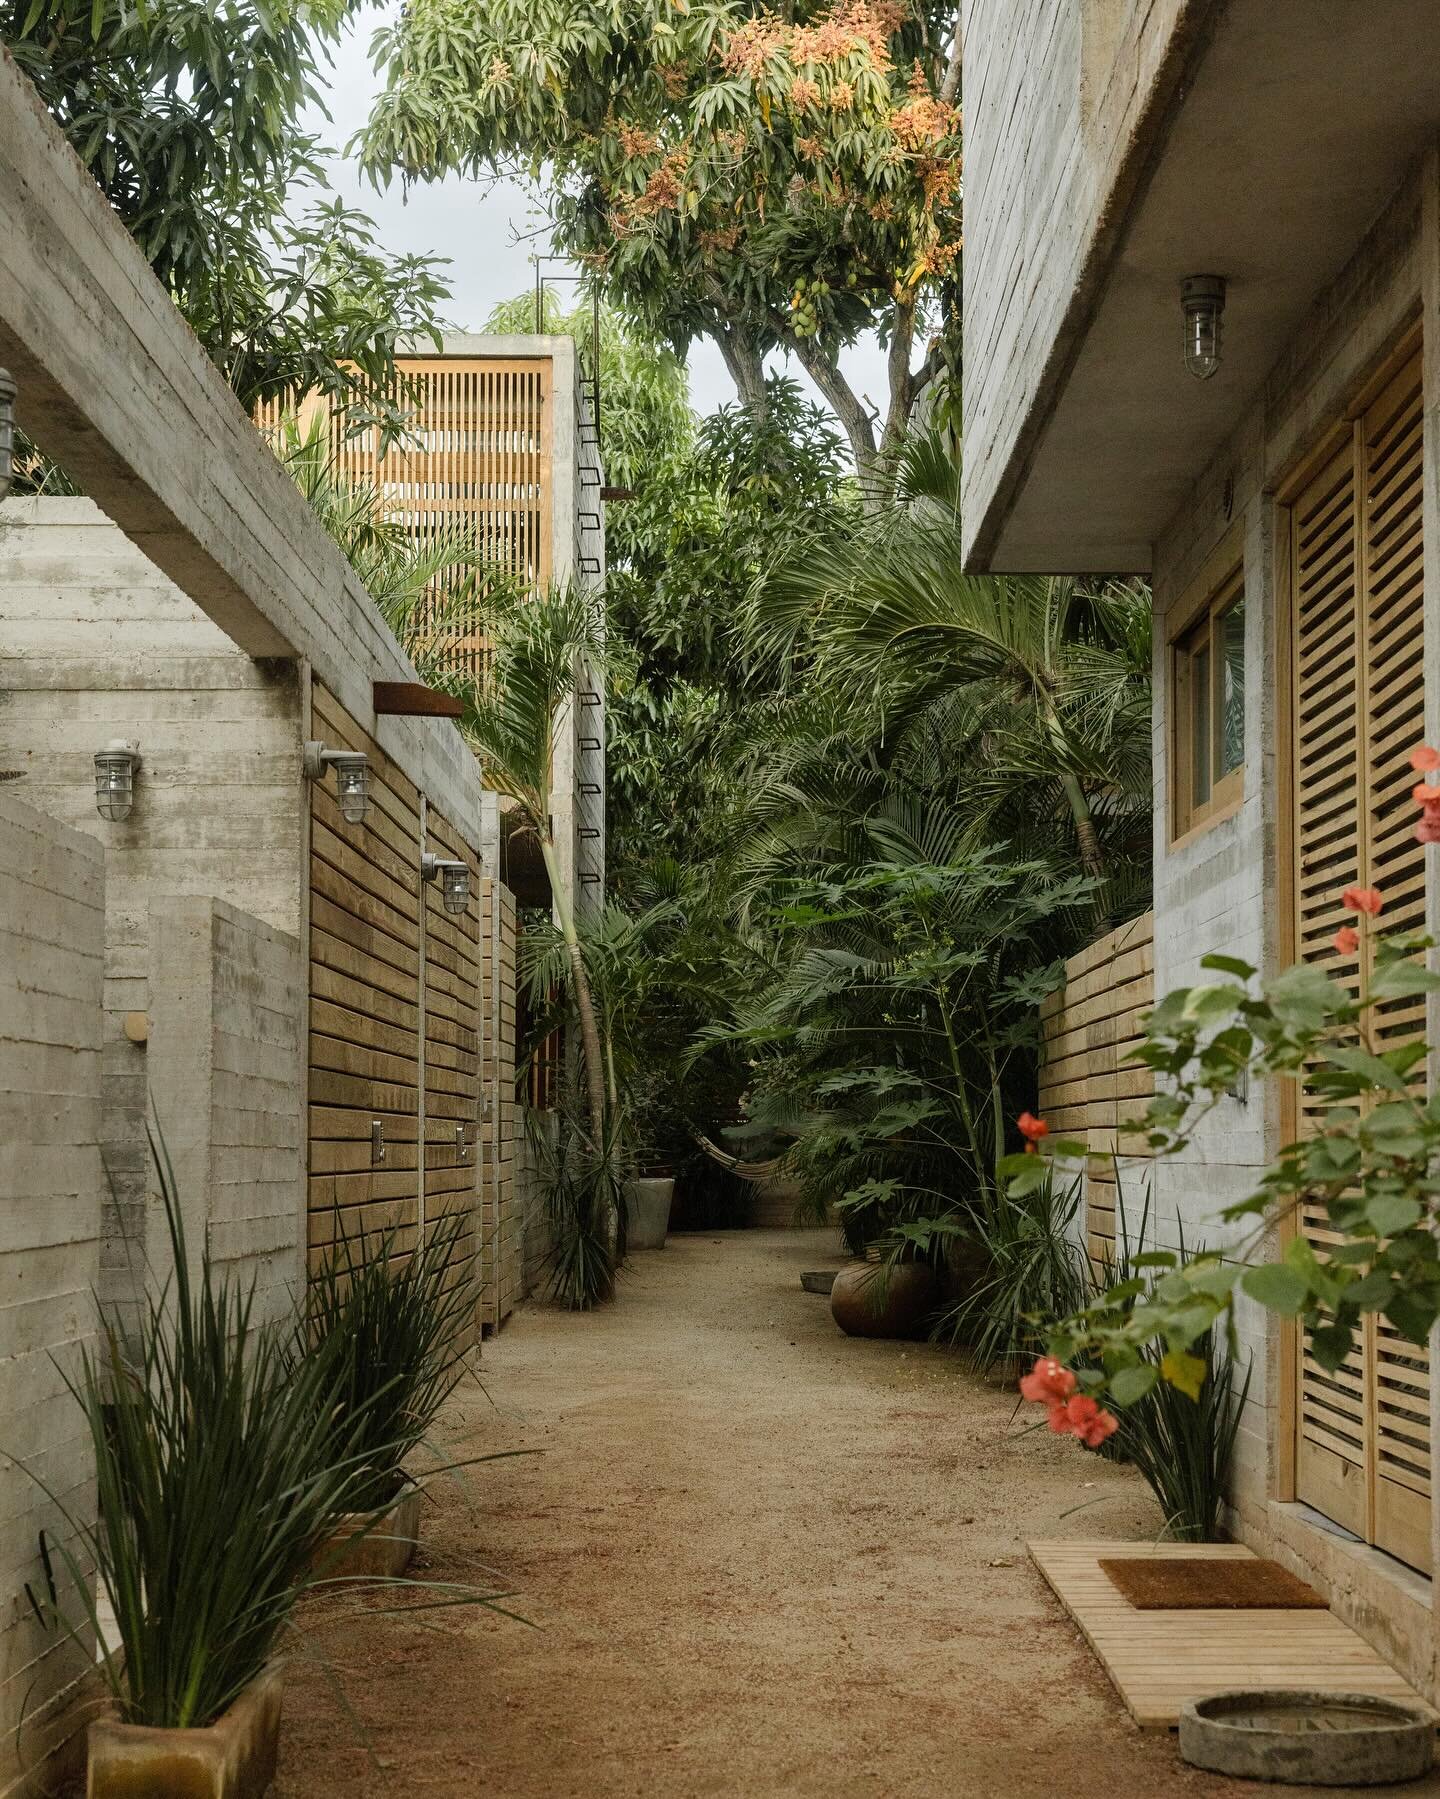 Under the blooming mango trees 🥭🌸🌞

Casa Macu / Sich @casamacusaladita 
Architect @chris.luce